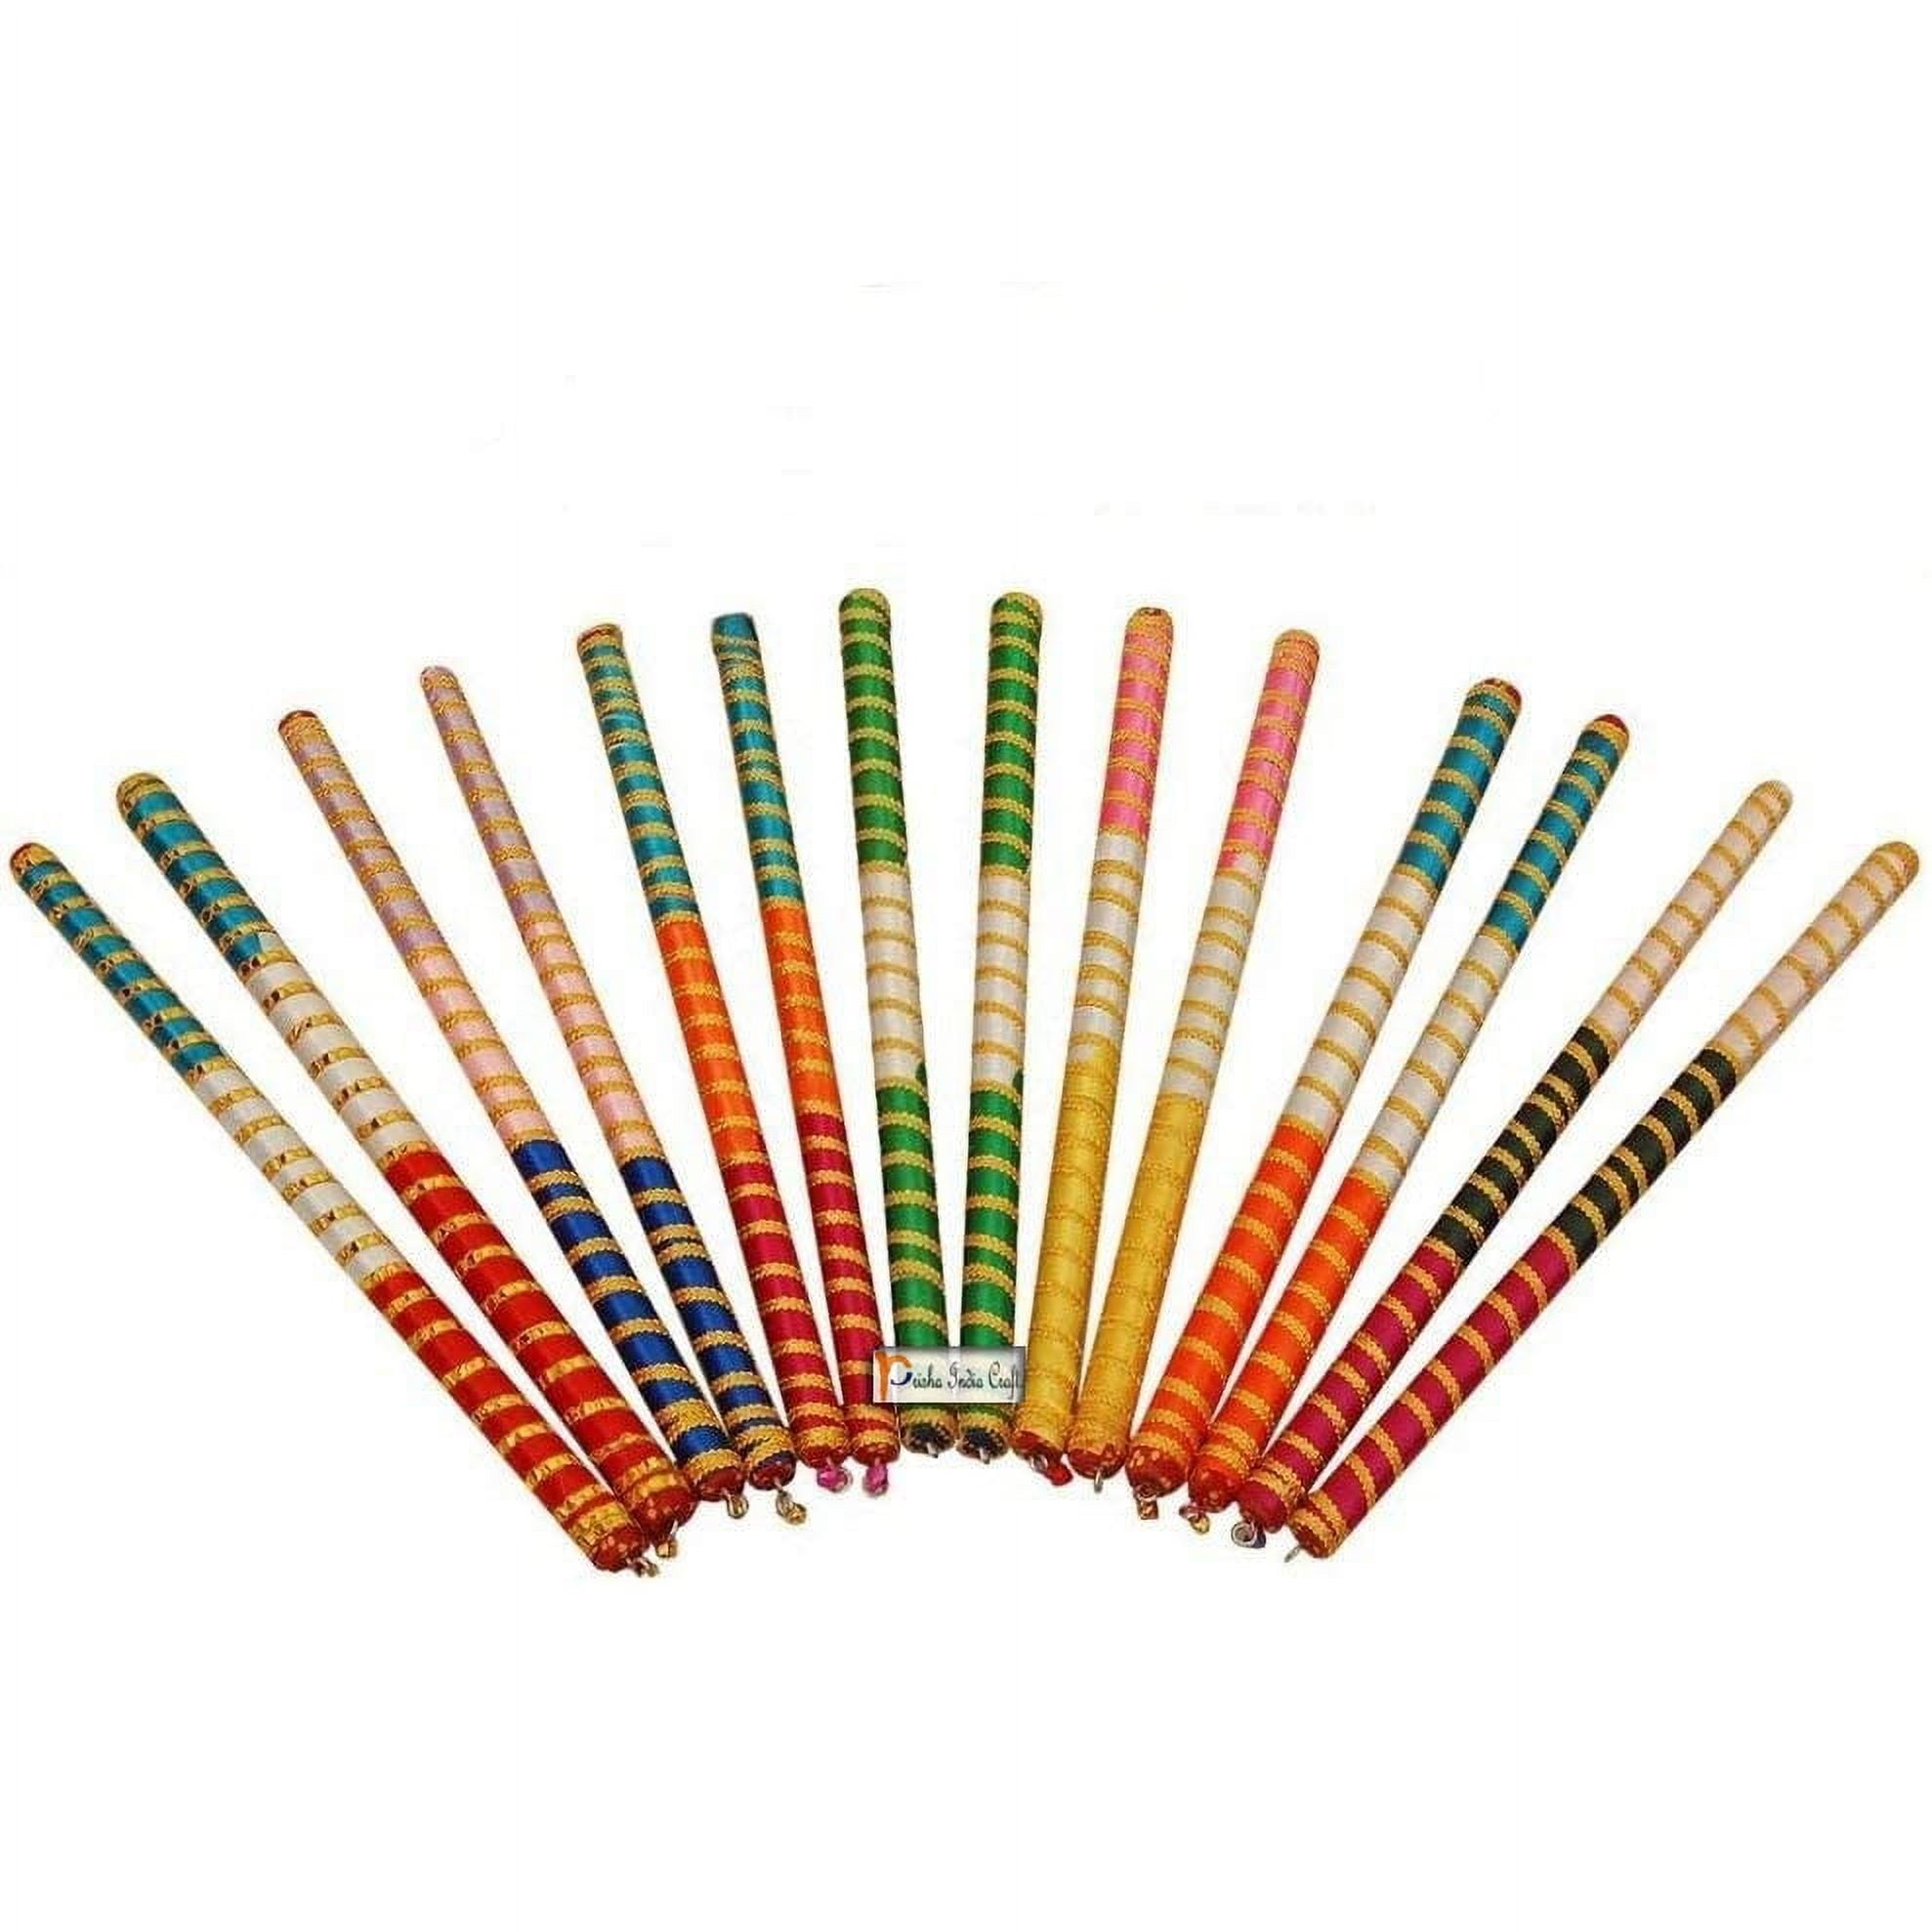 100 Pcs Natural Wood Popsicle Sticks Wooden Craft Sticks Wax 4-1/2 x 3/8 New